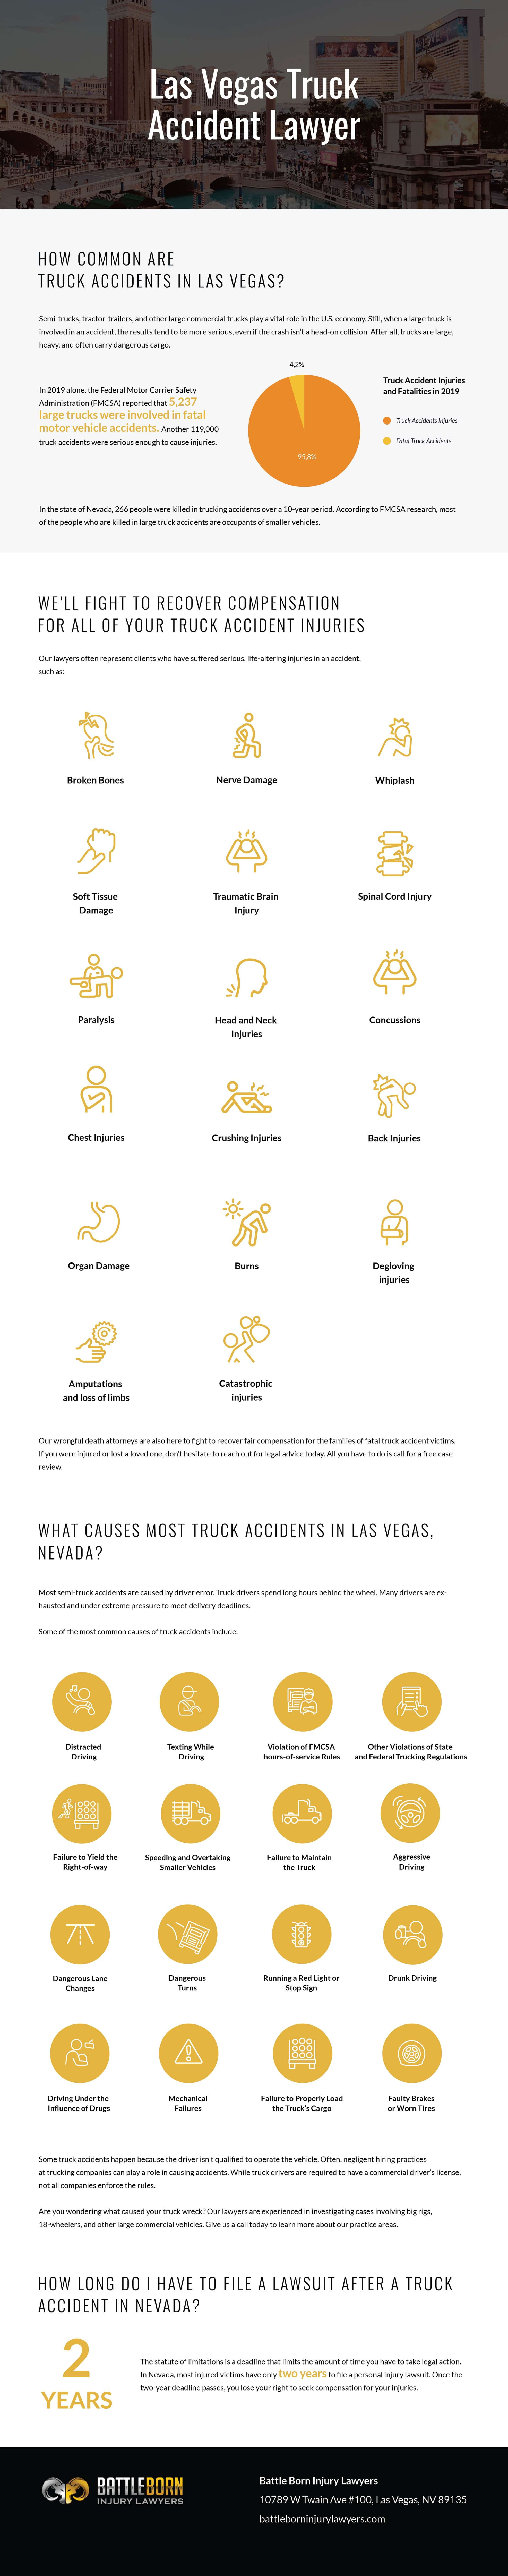 Las Vegas Truck Accidents Infographic